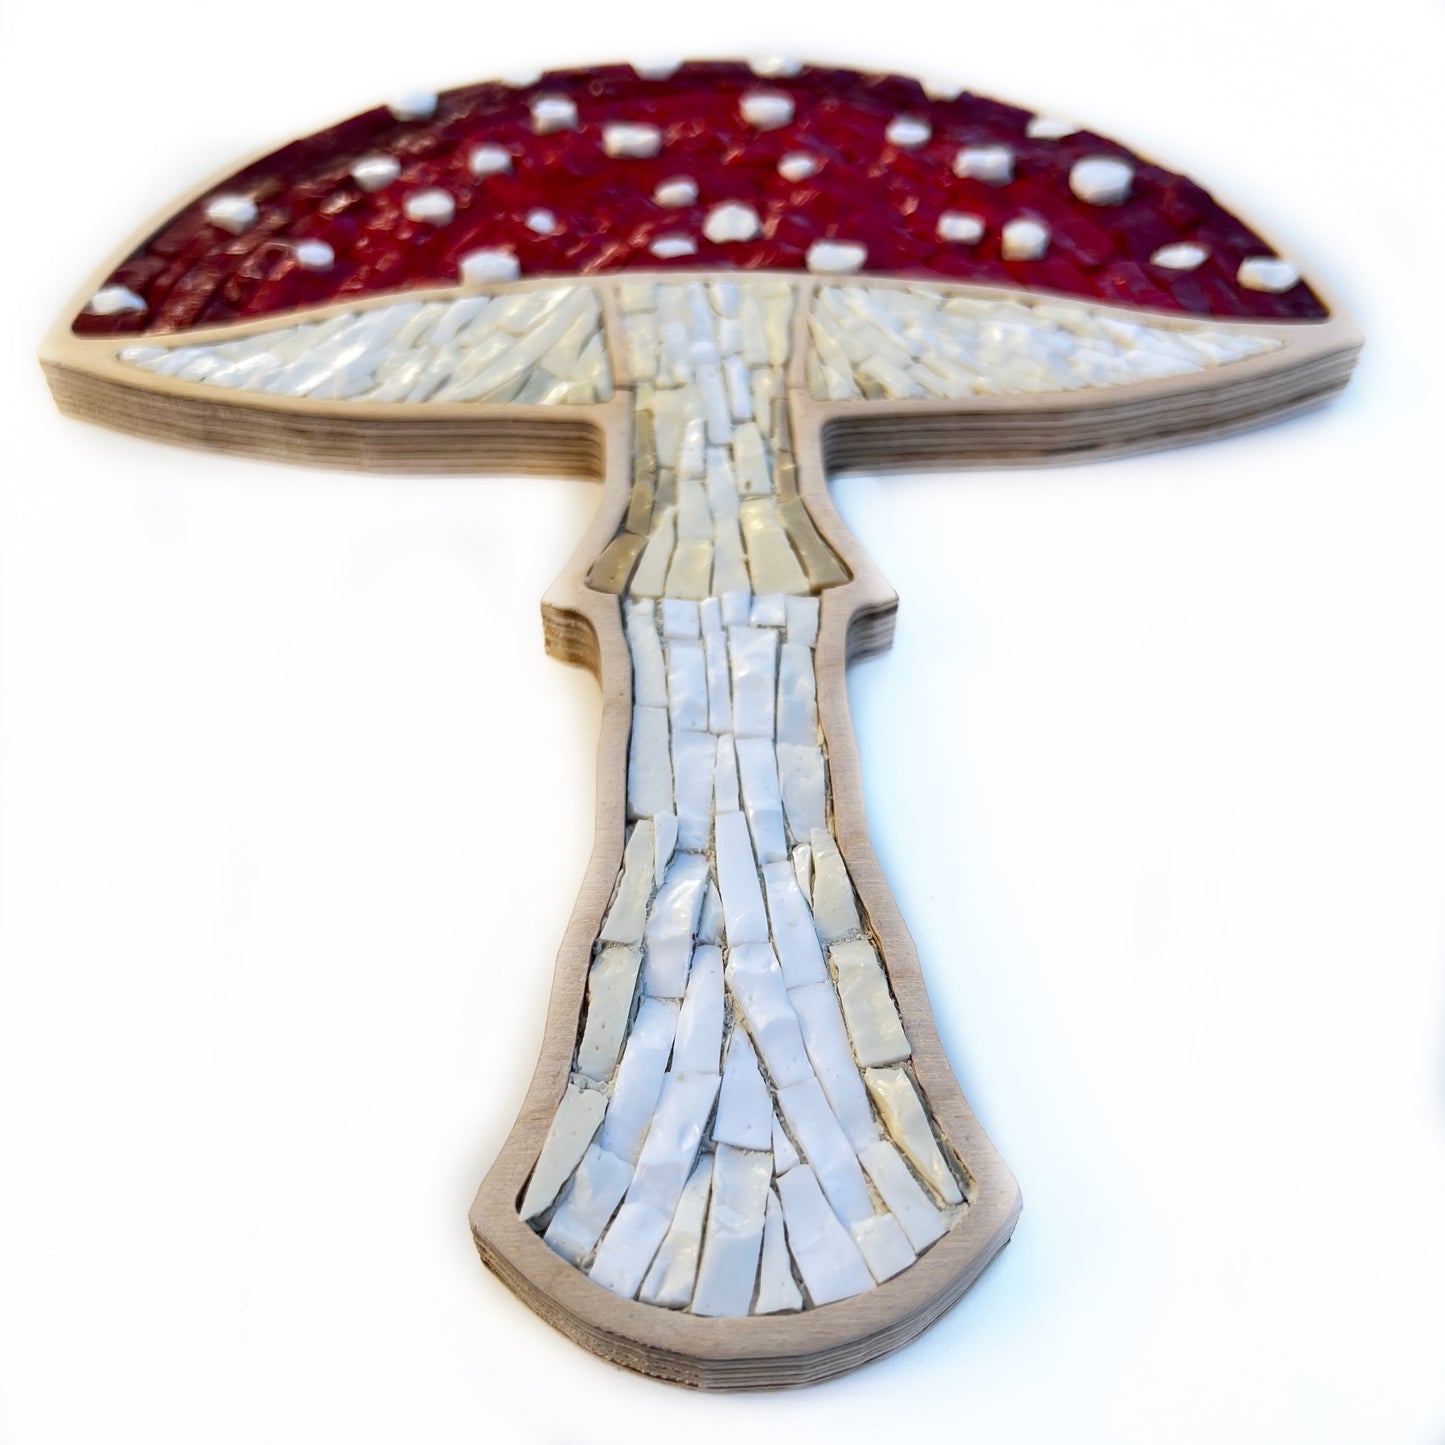 Red Mushroom Mosaic by Sharra Frank